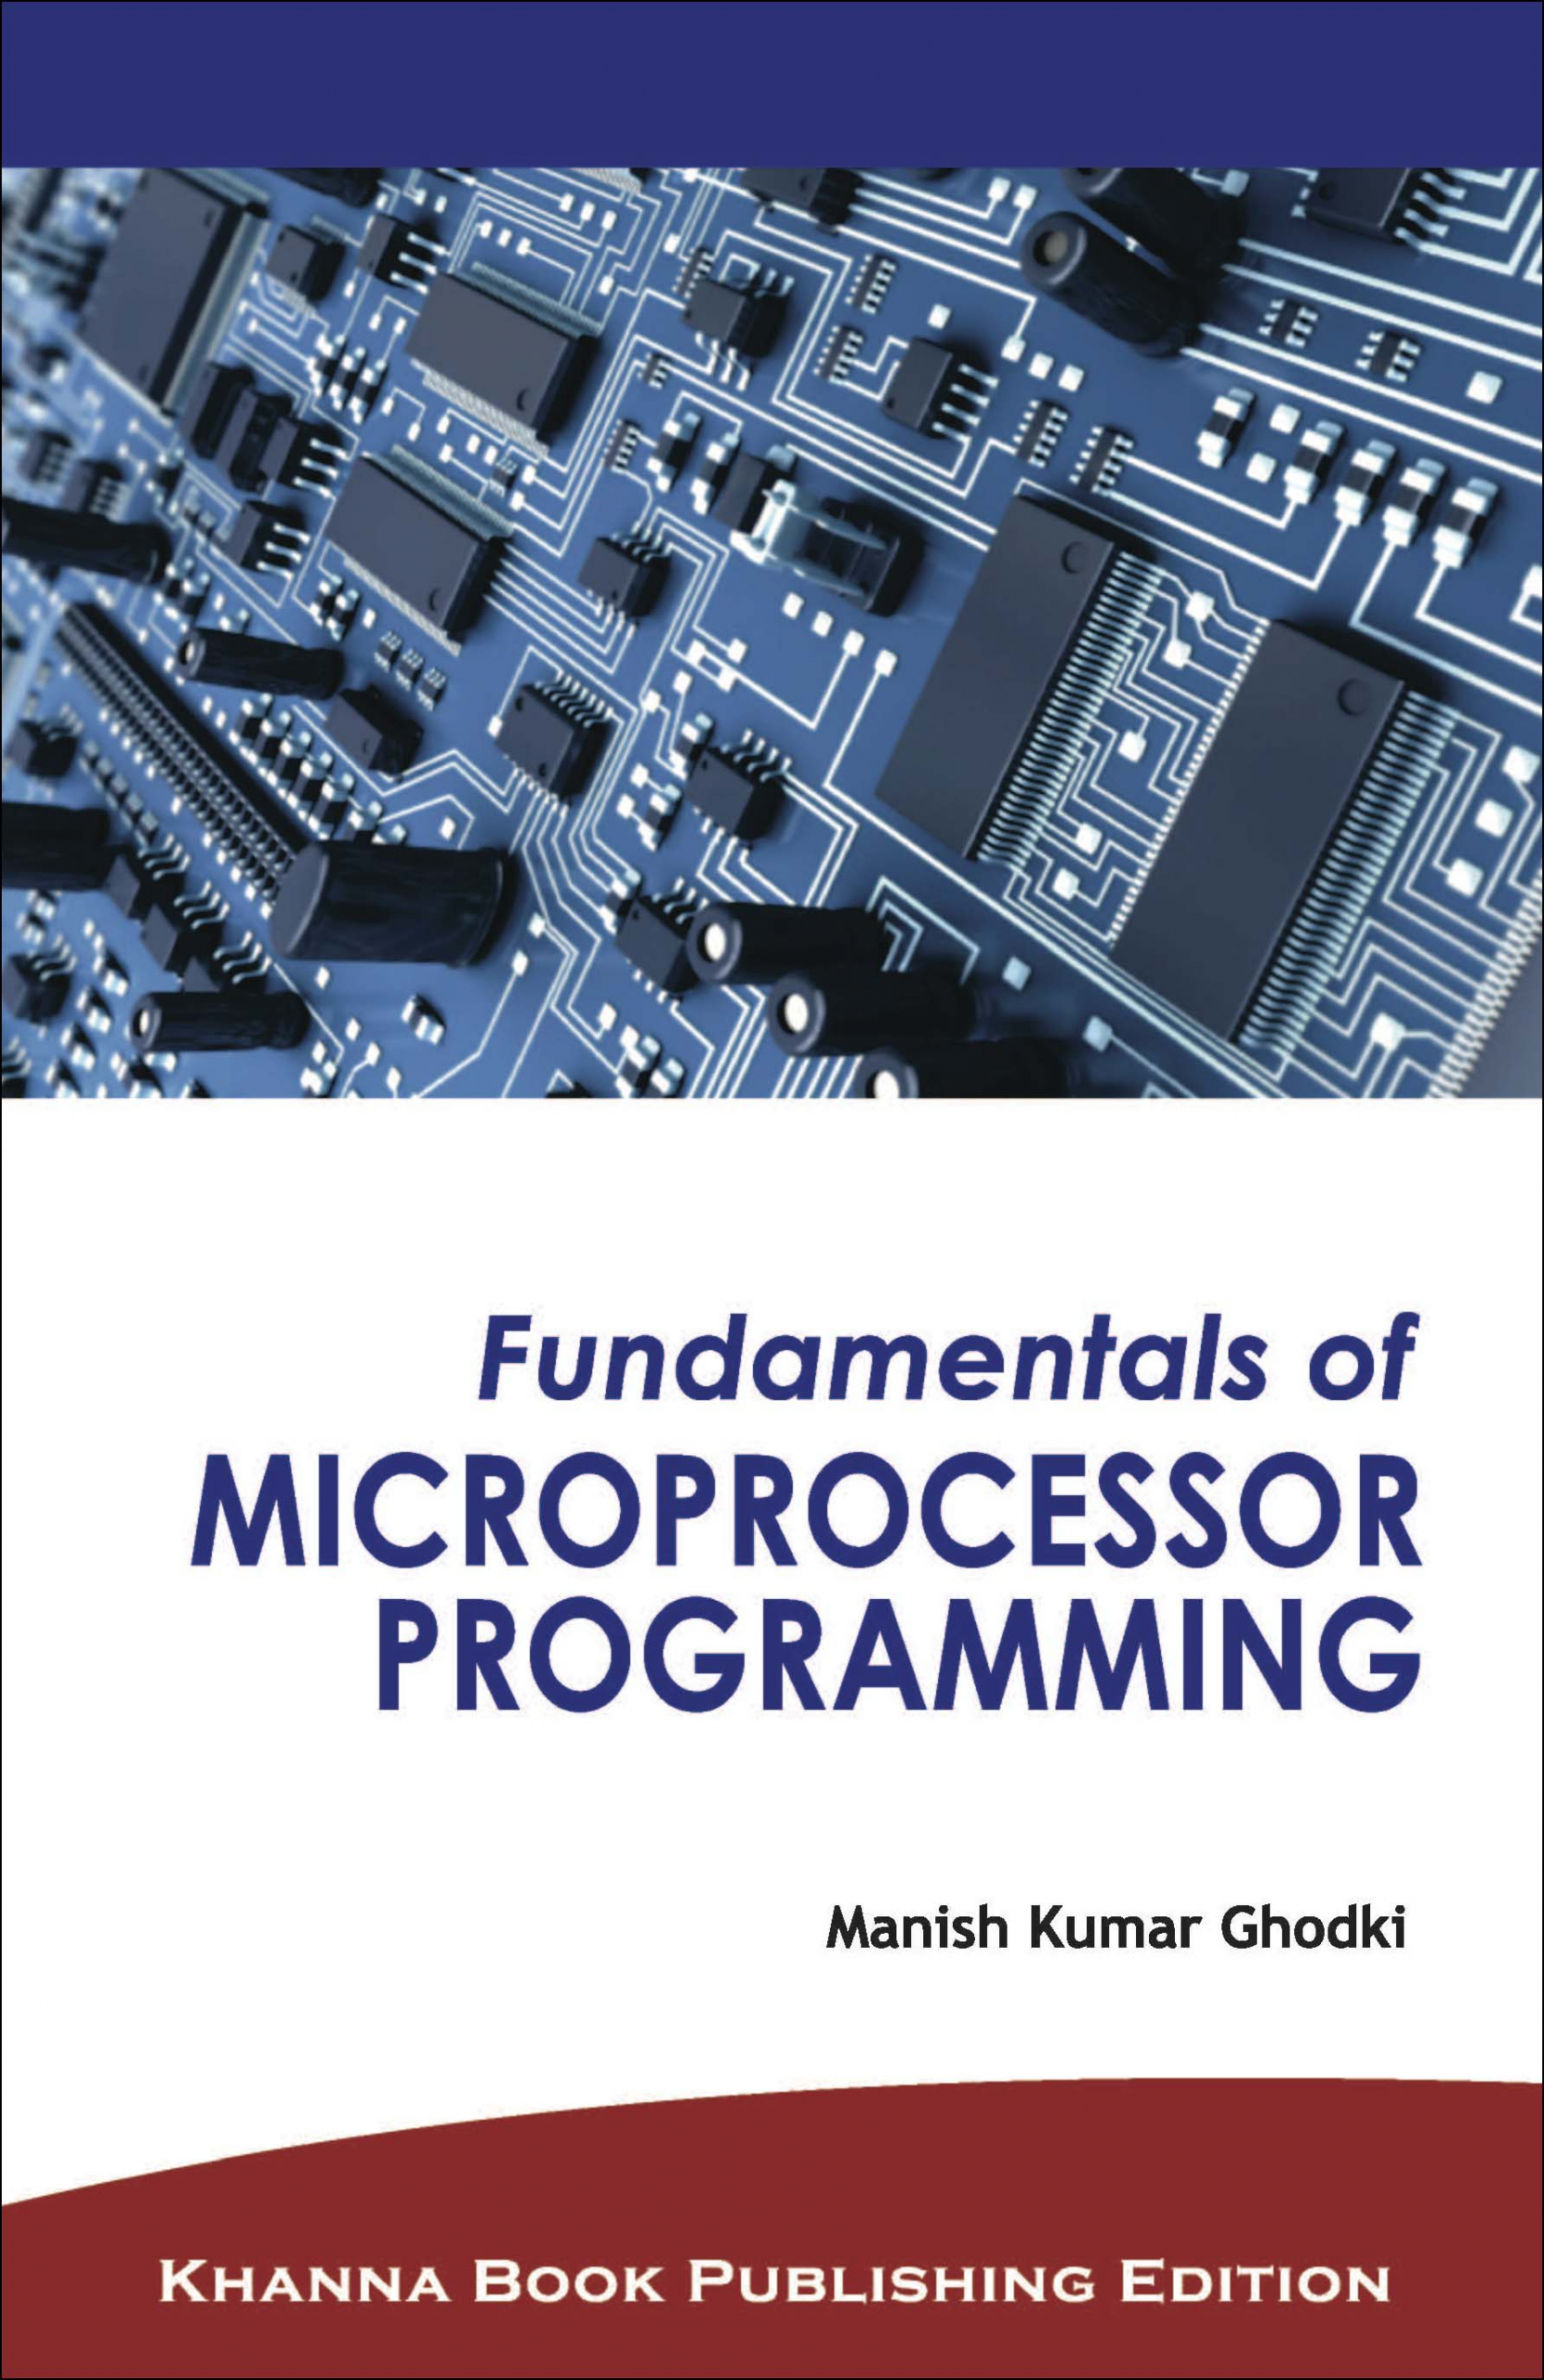 Fundamentals of Microprocessor Programming